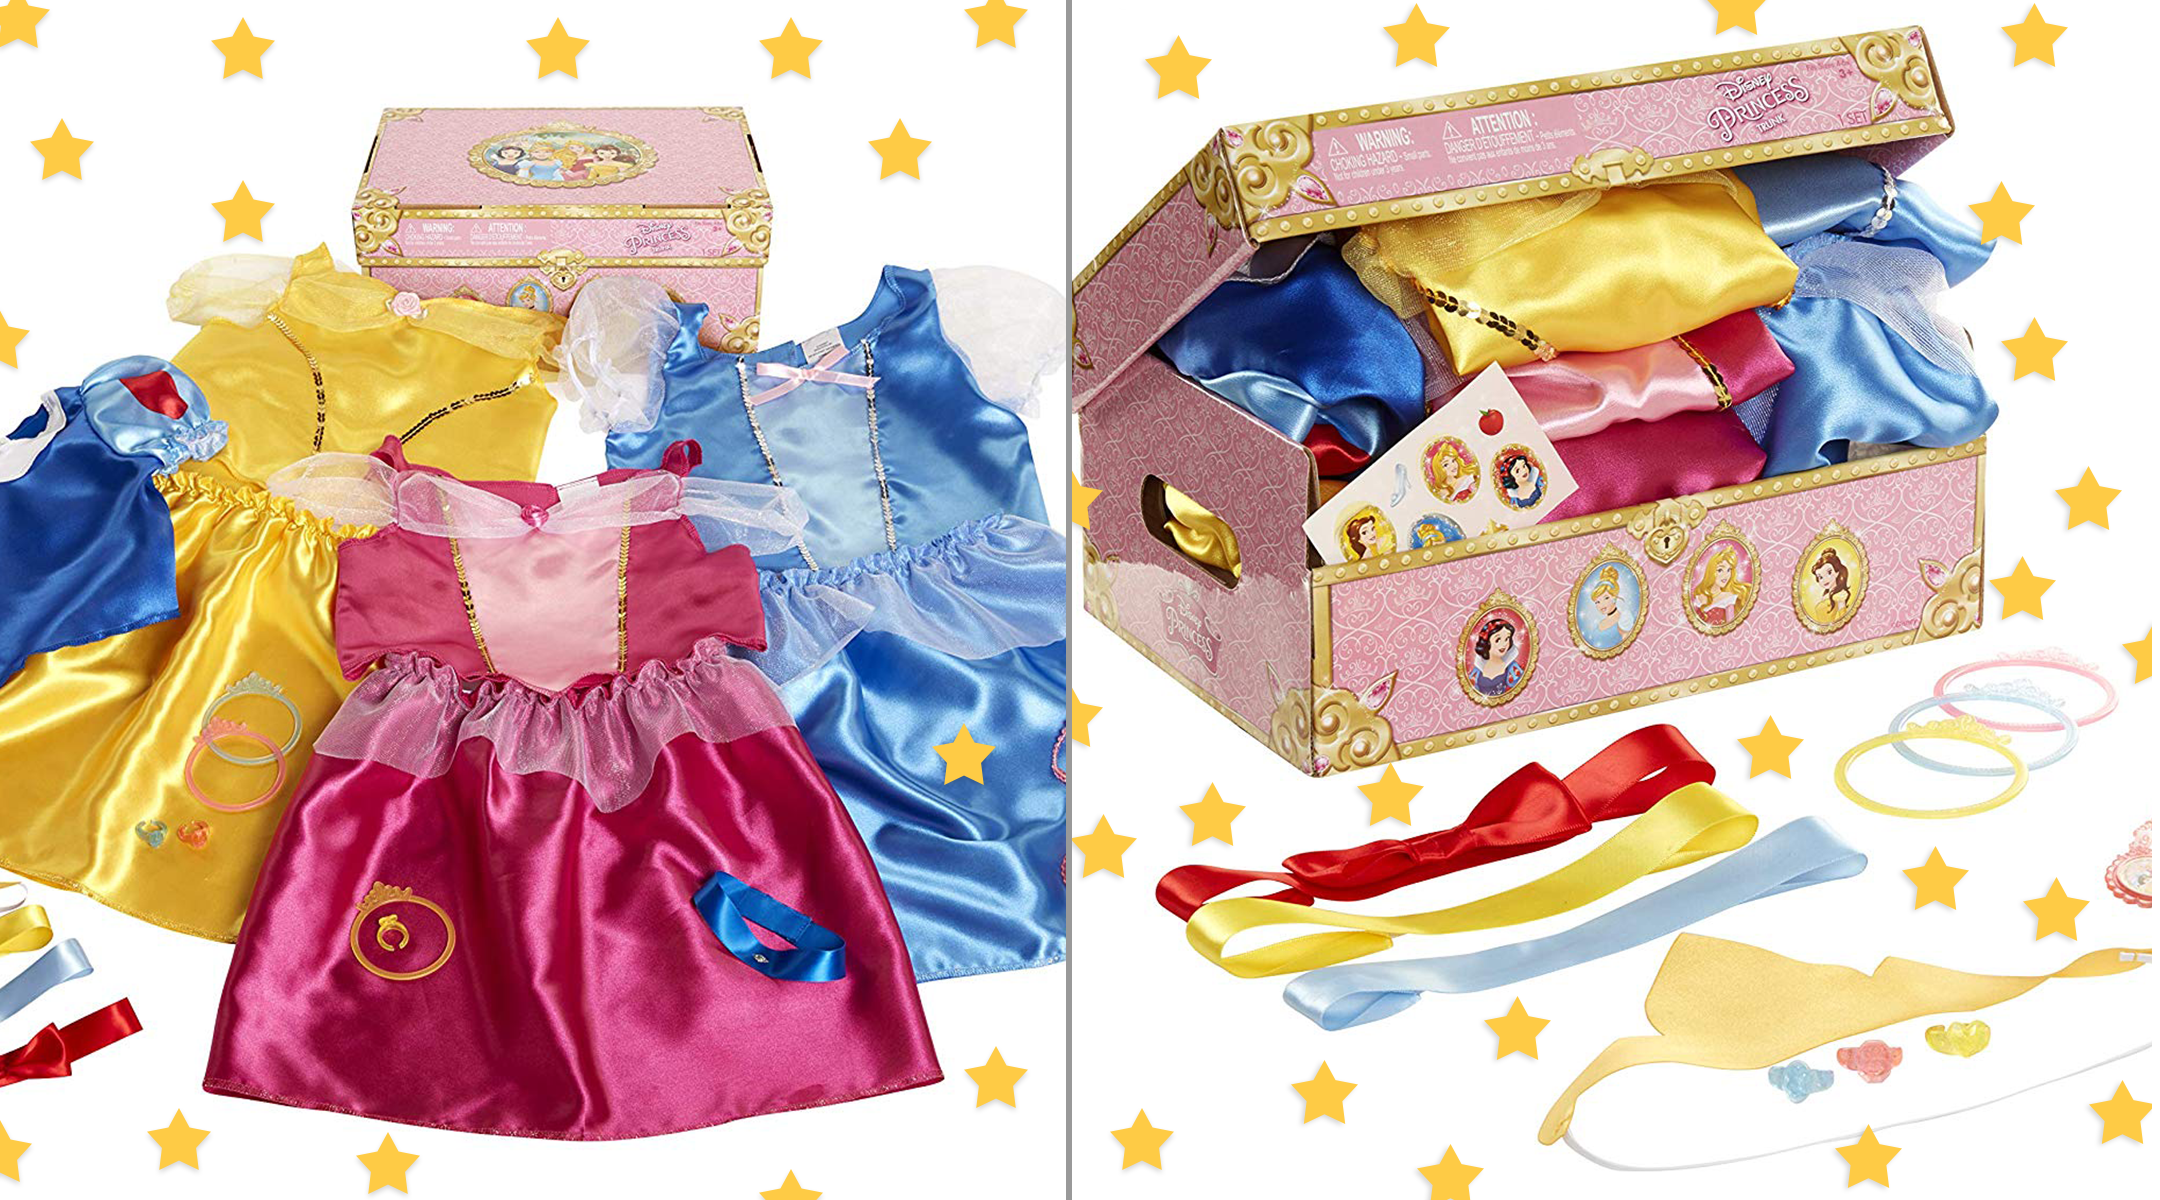 disney princess dress up box from amazon